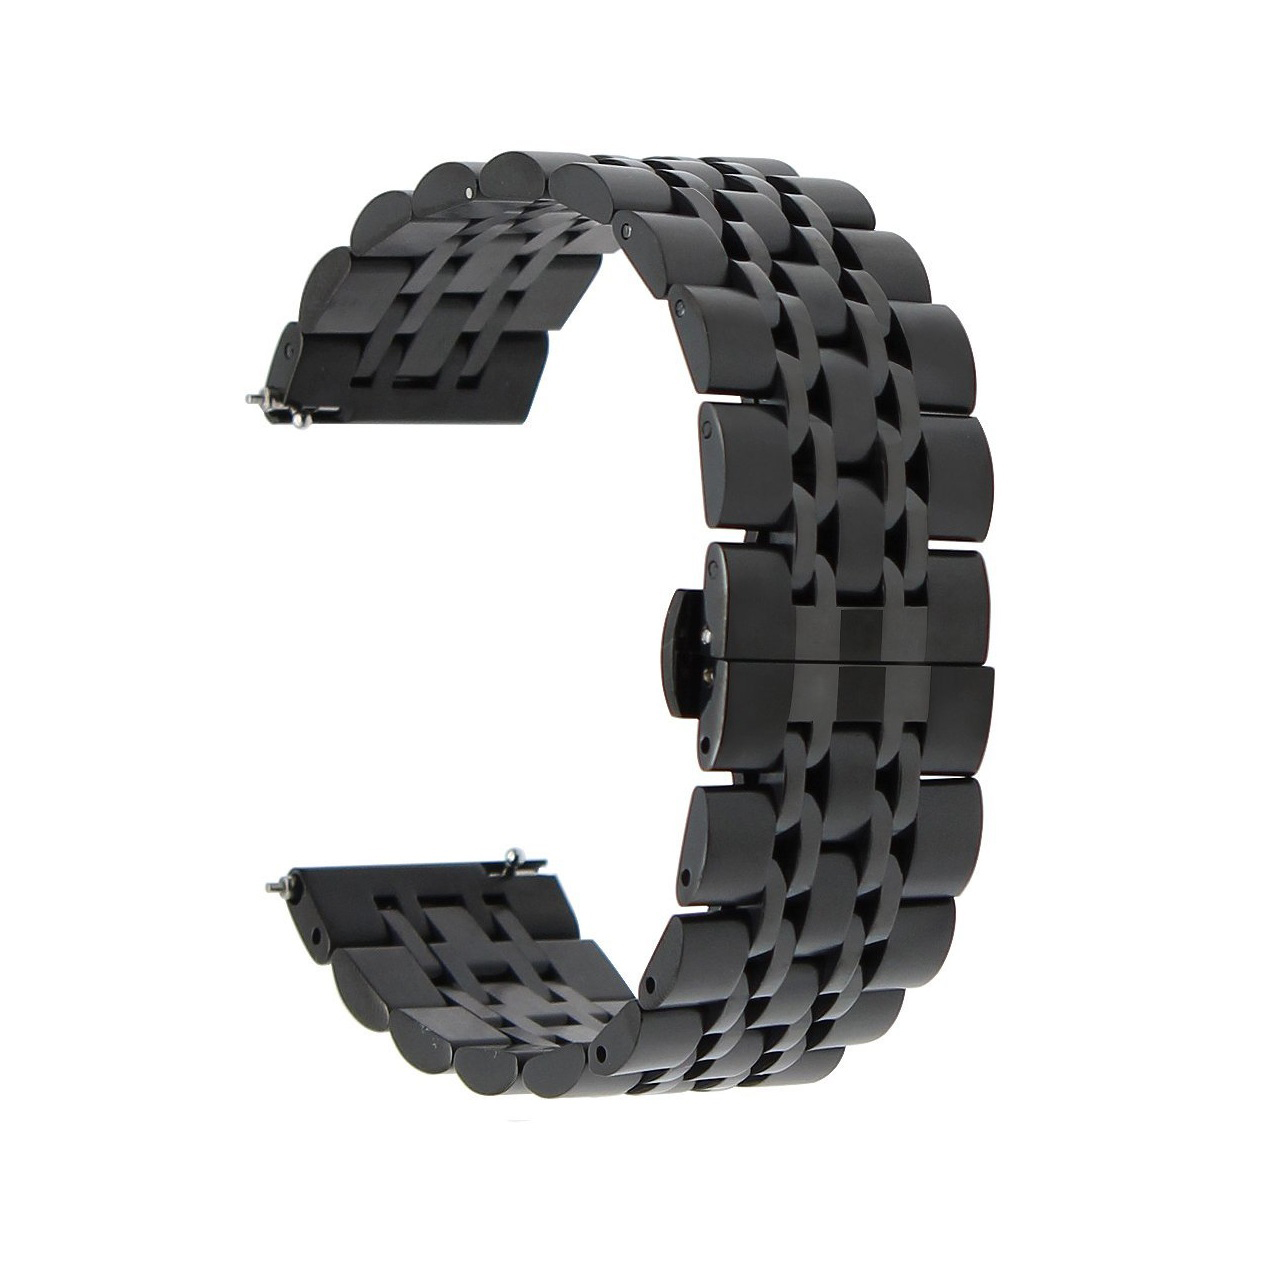 بند مدل Seven Bead مناسب برای ساعت هوشمند سامسونگ Gear S2 Classic / Gear Sport / Galaxy watch 42mm